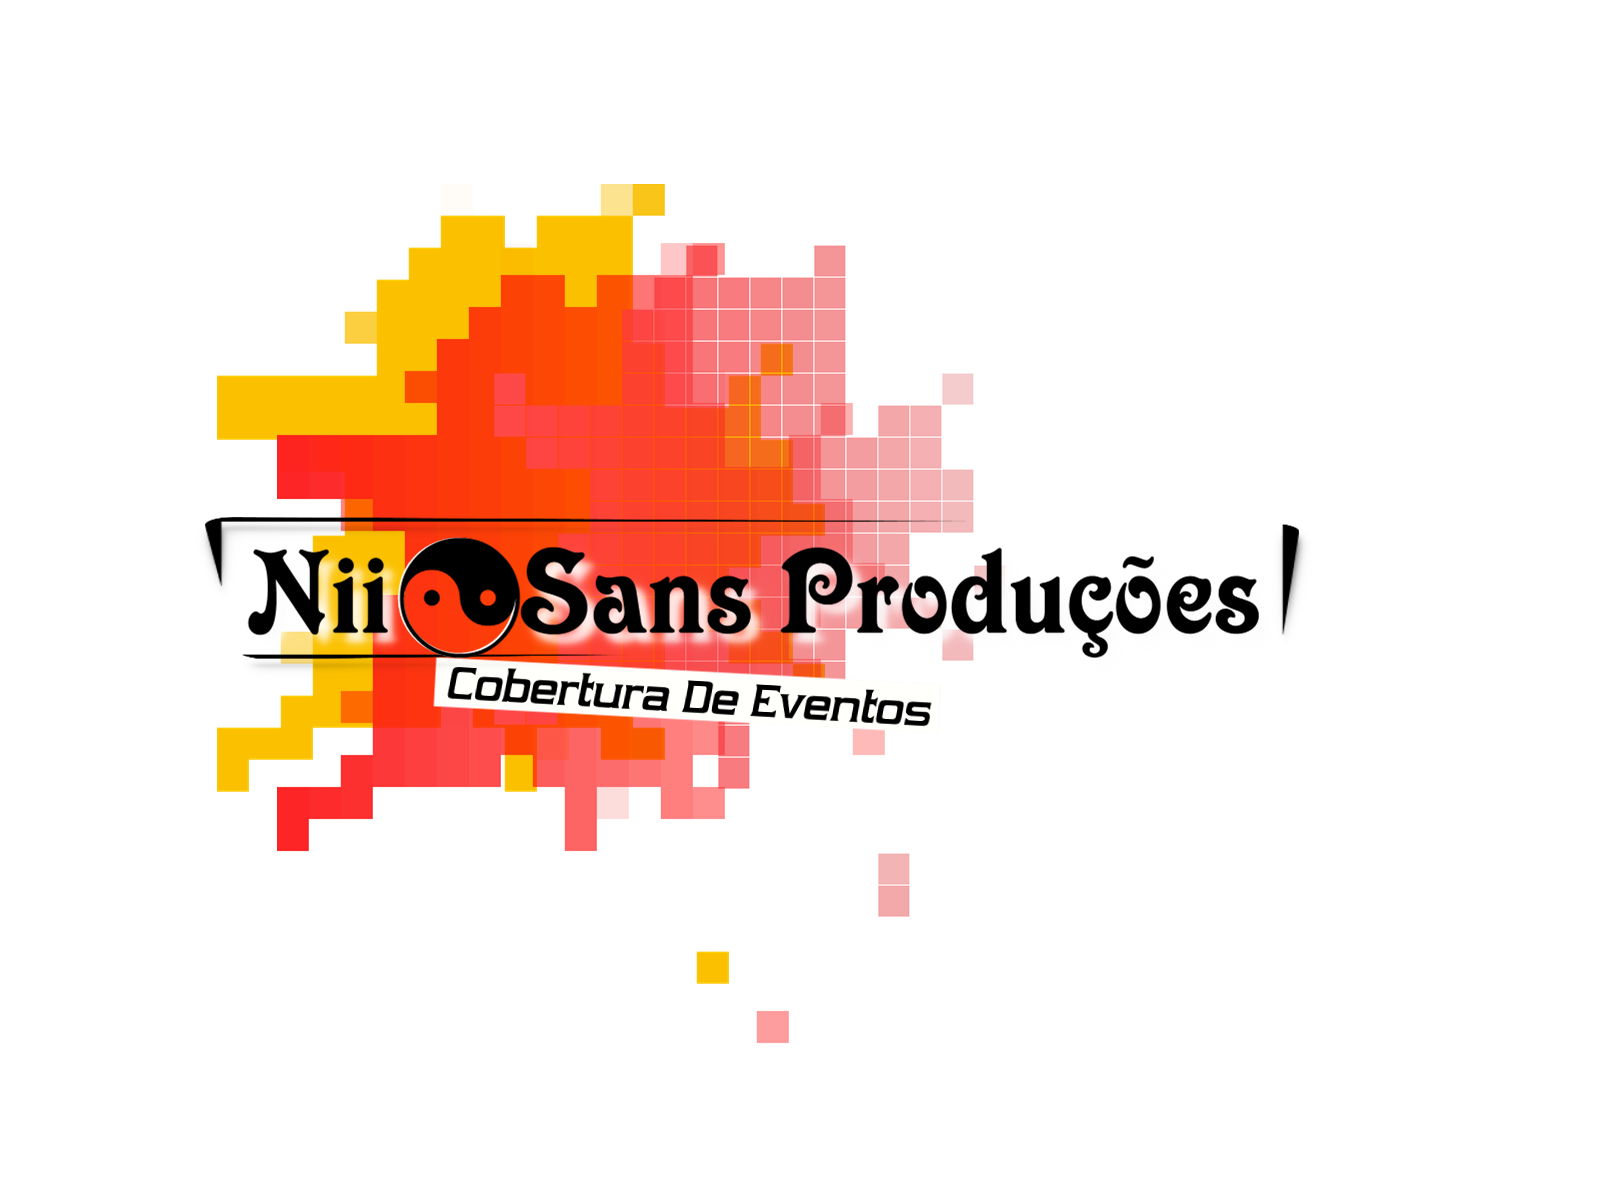 Nii-Sans Produções